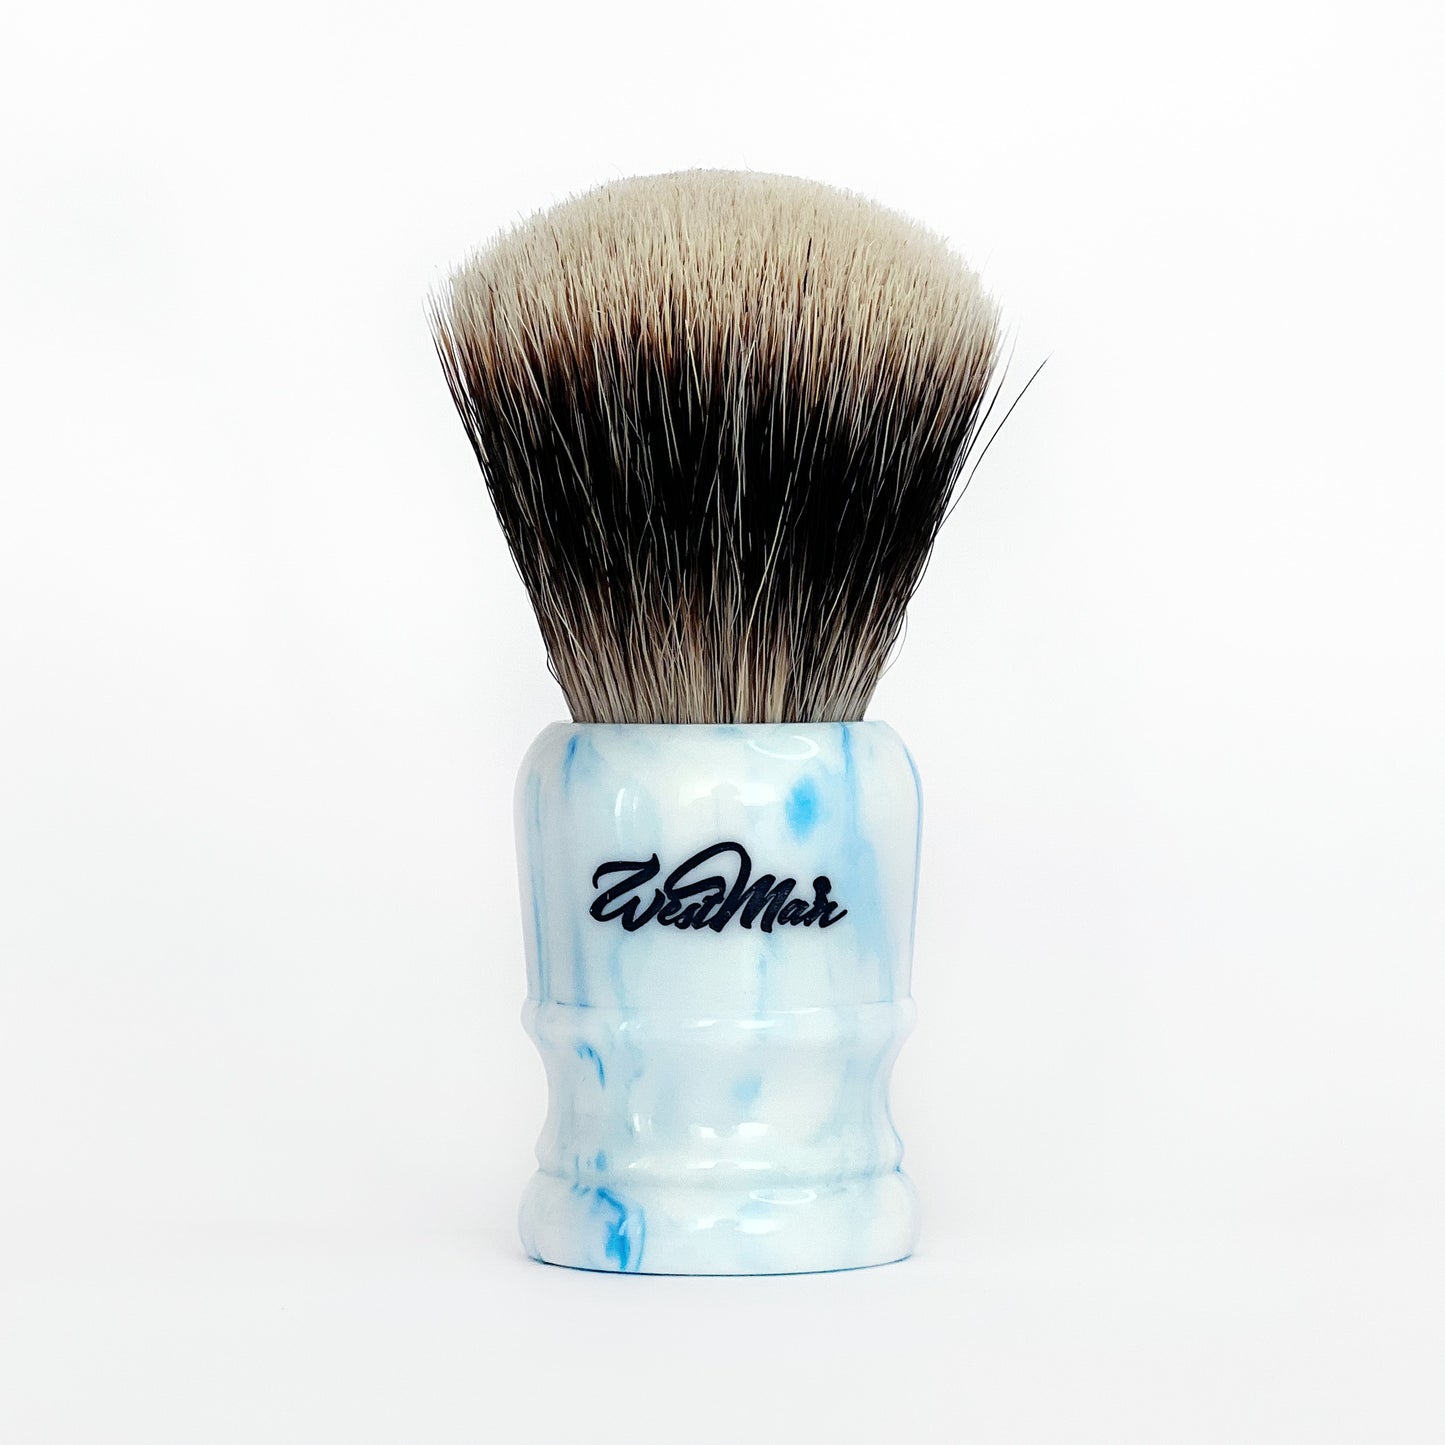 Adamastor Finest Badger Shaving Brush